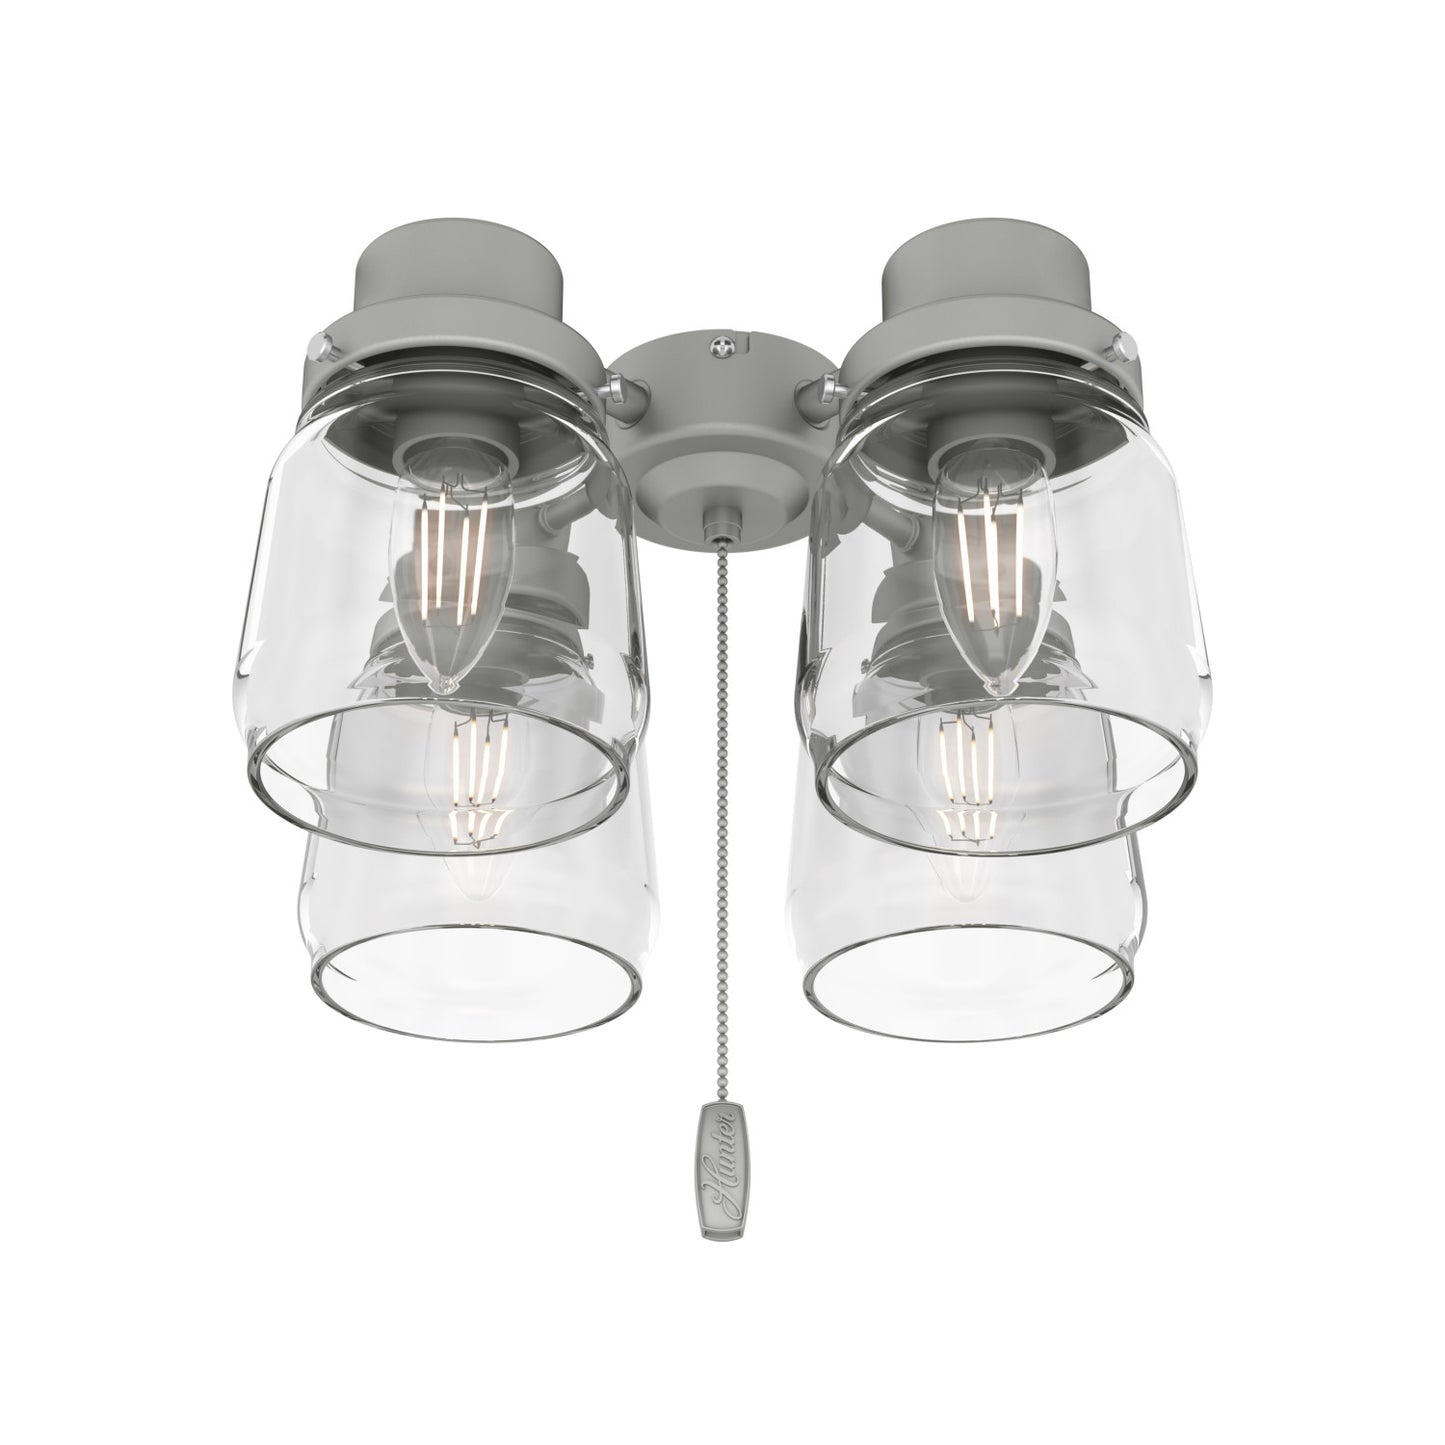 Original 4 Light Accessory Fitter and Glass, Matte Silver - 99387